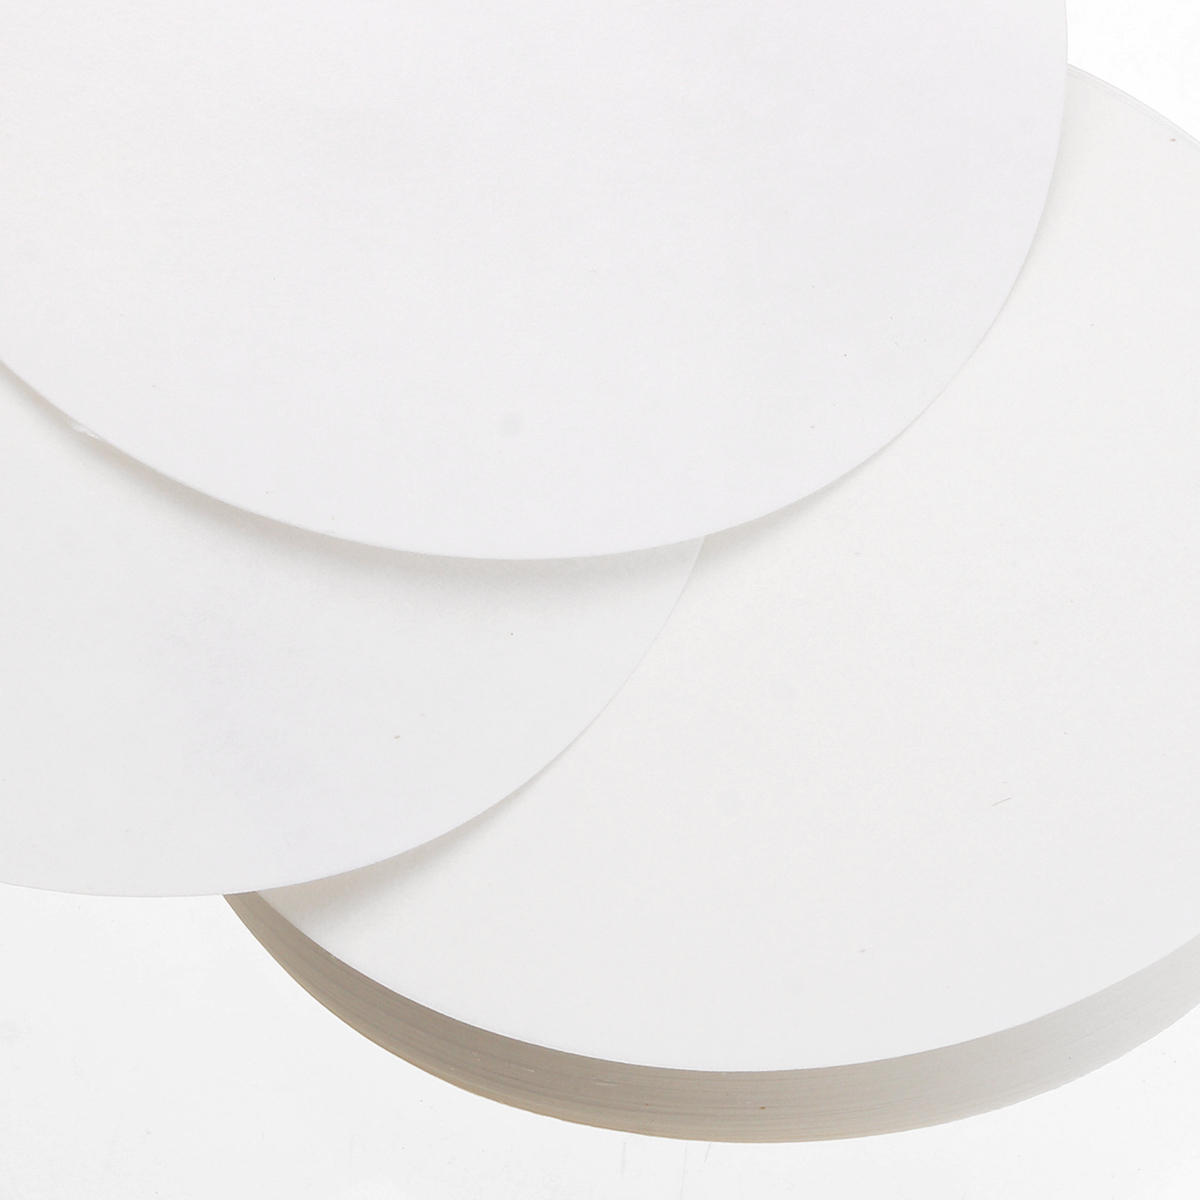 100 Stks / set 7/9/11 / 12.5 / 15/18 cm Kwantitatieve Filter papier Asloze Circulaire Trechter Filte